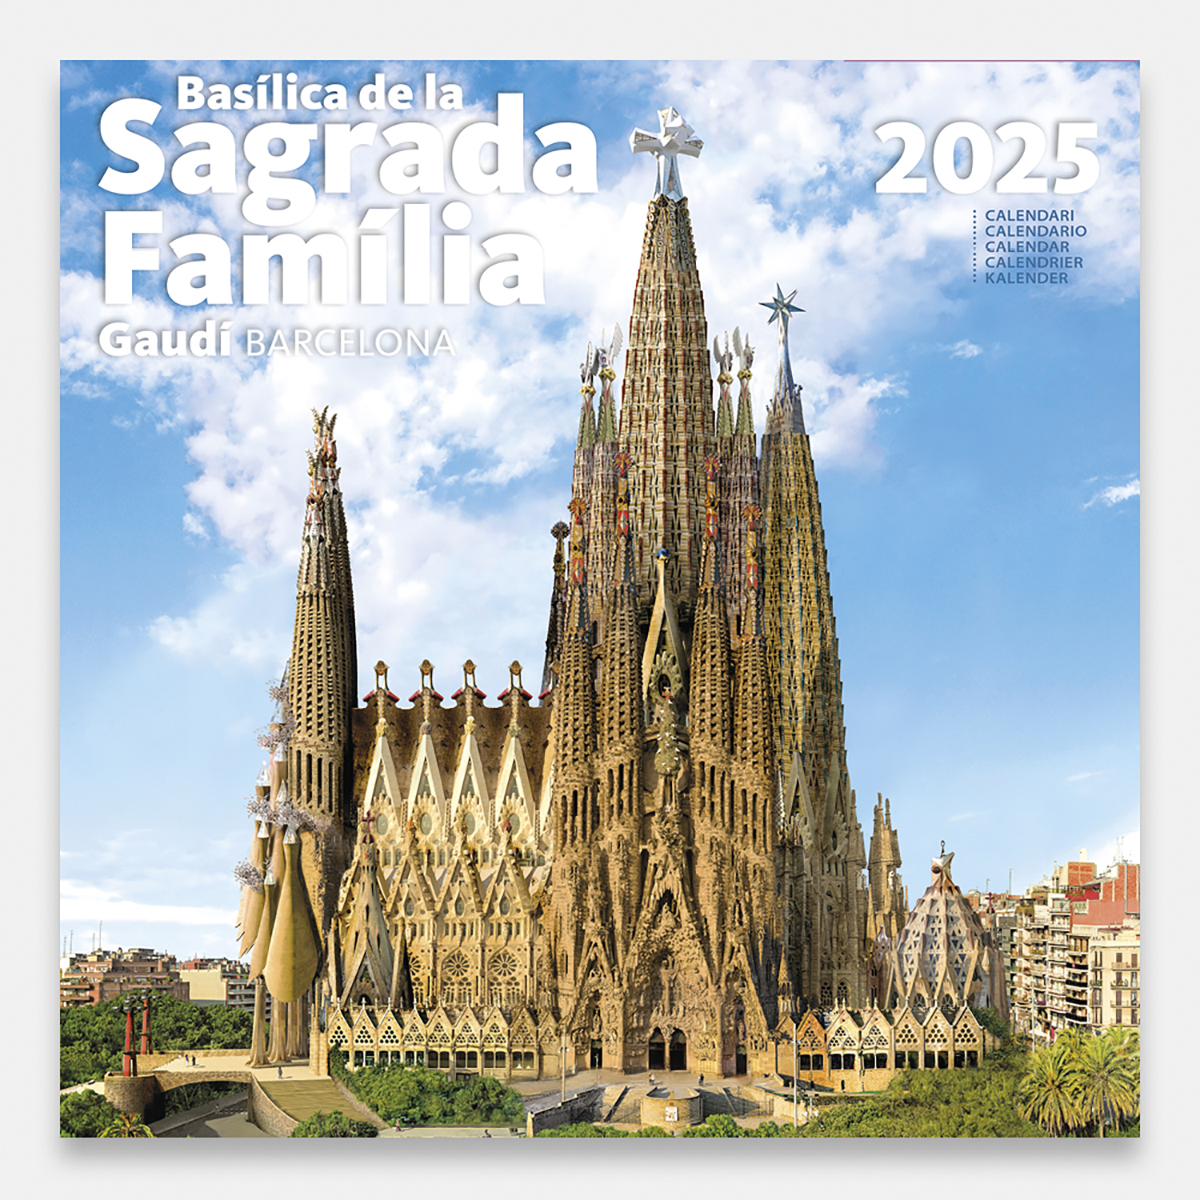 Calendrier 2025 Basílica de la Sagrada Família 25sfg1 calendario pared 2025 gaudi sagrada familia